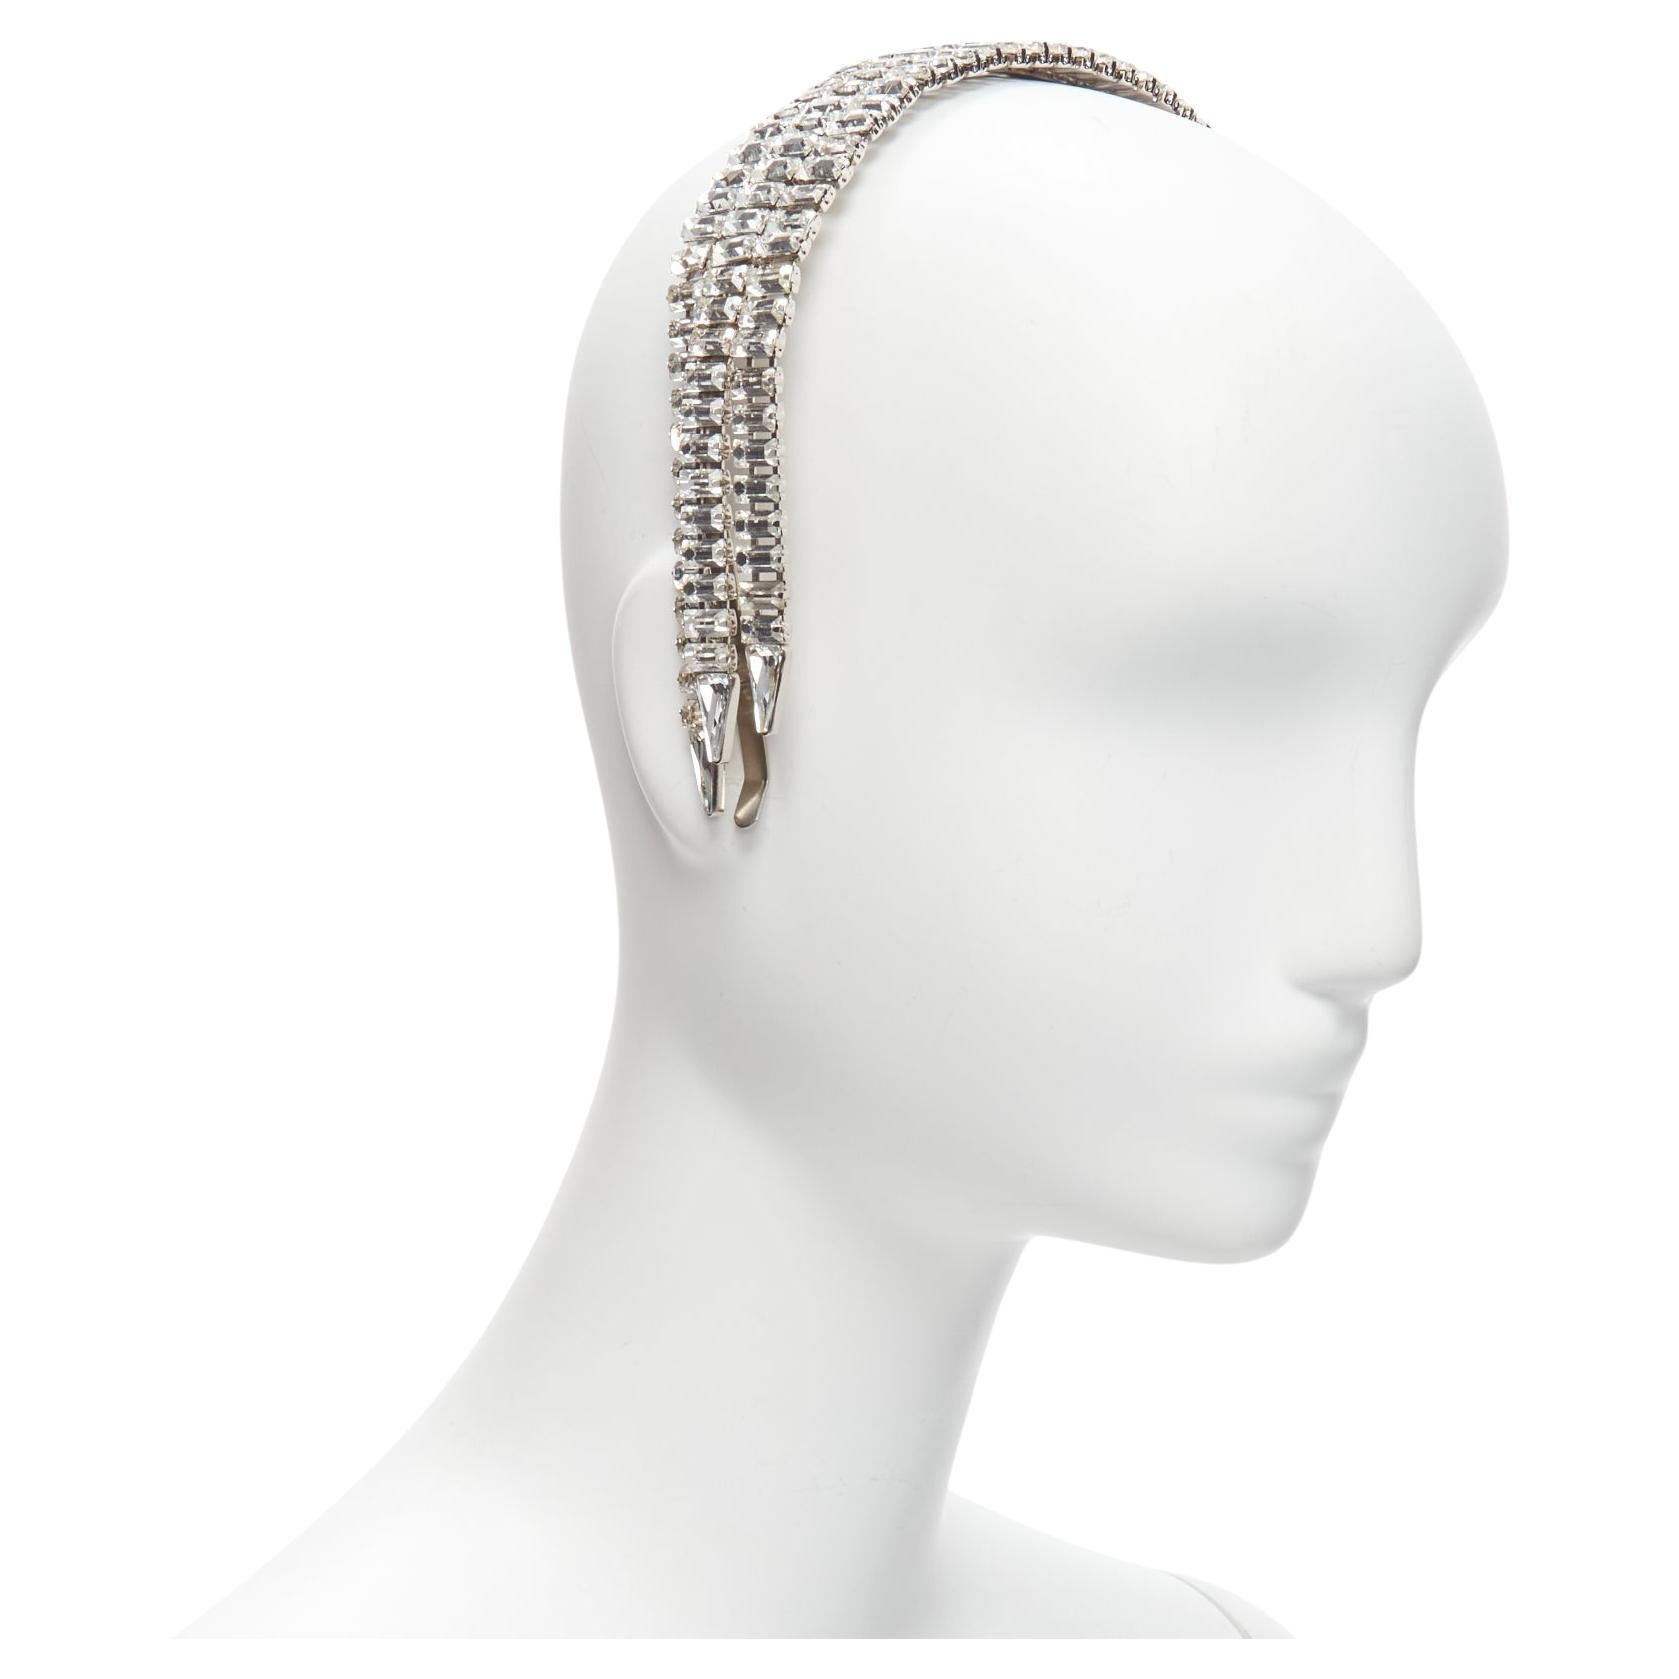 Seltenes kaskadenförmiges GUCCI Alessandro Michele GG Logo-Kopfband aus Kristall im Angebot